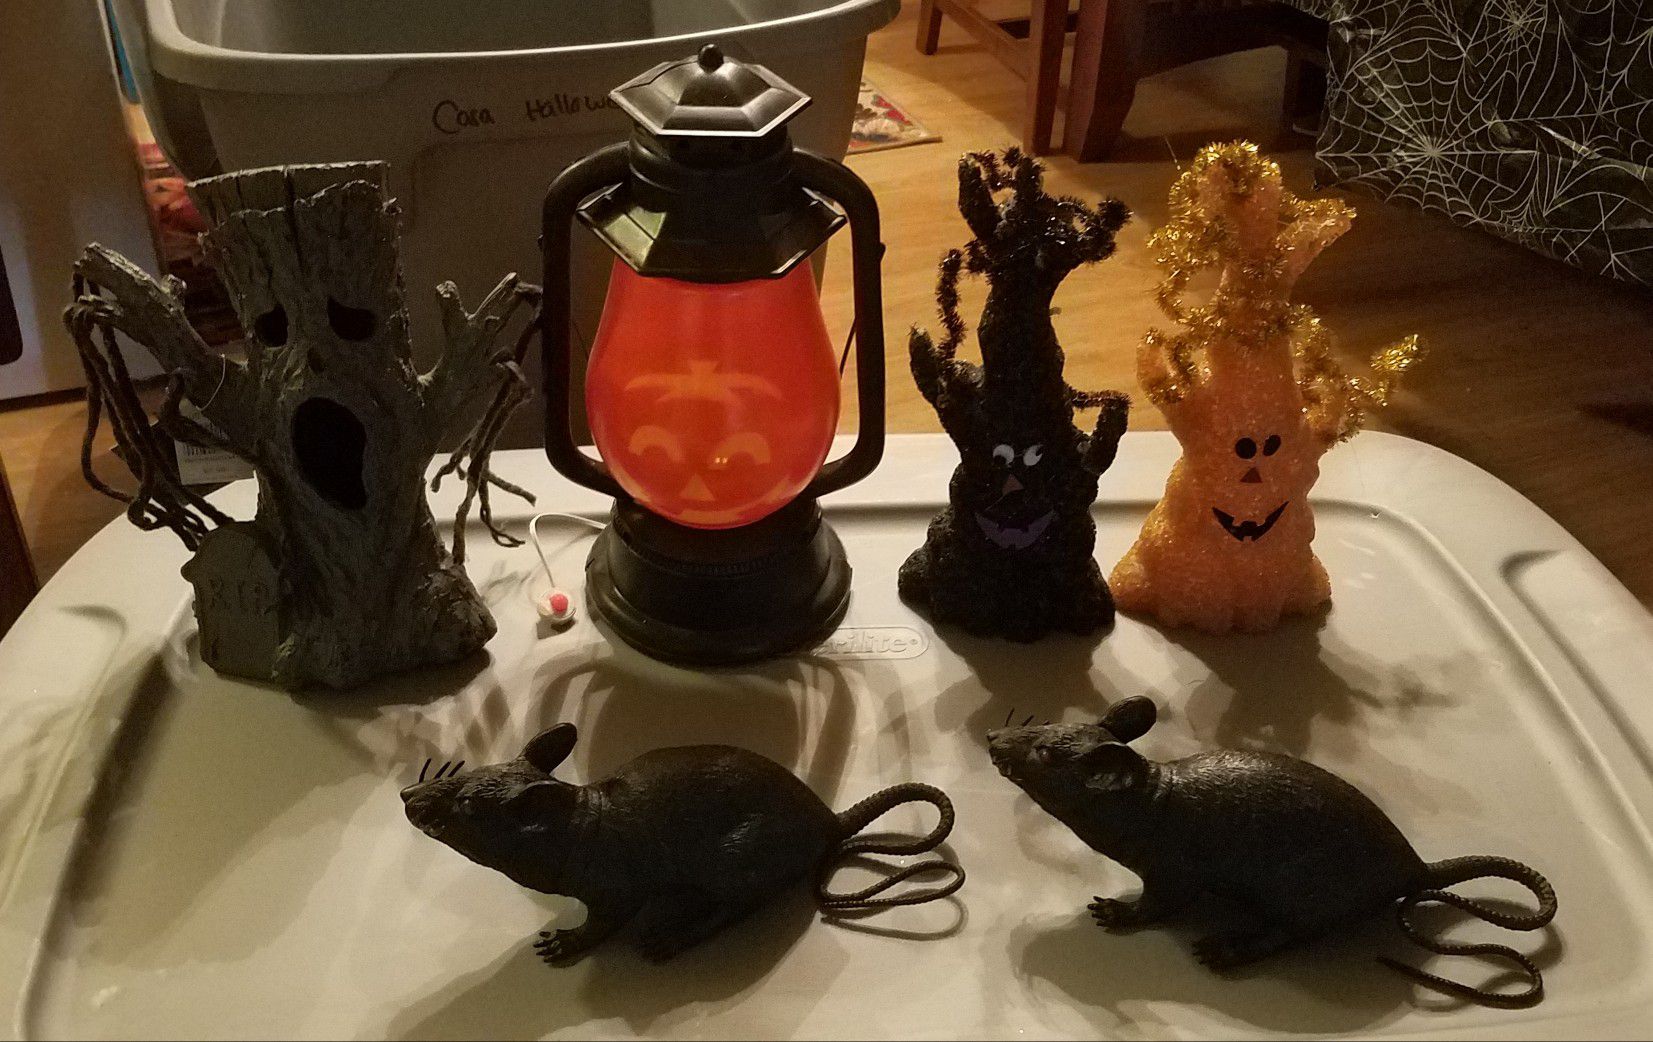 Assorted Halloween decorations